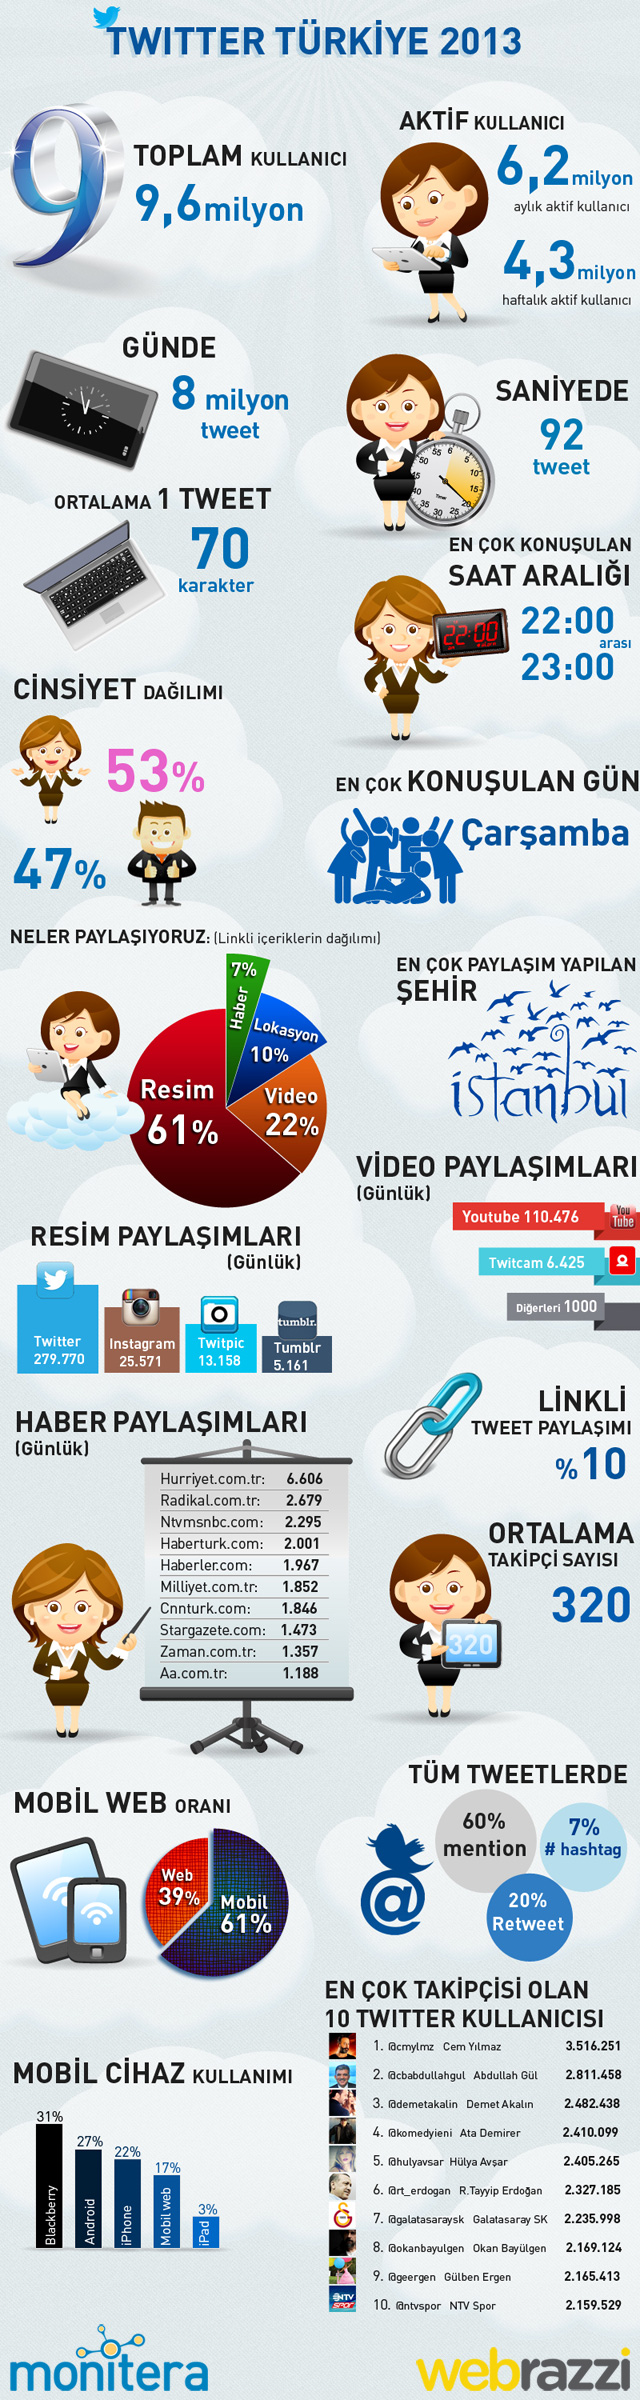 twitter-turkiye-2013-infografigi-640